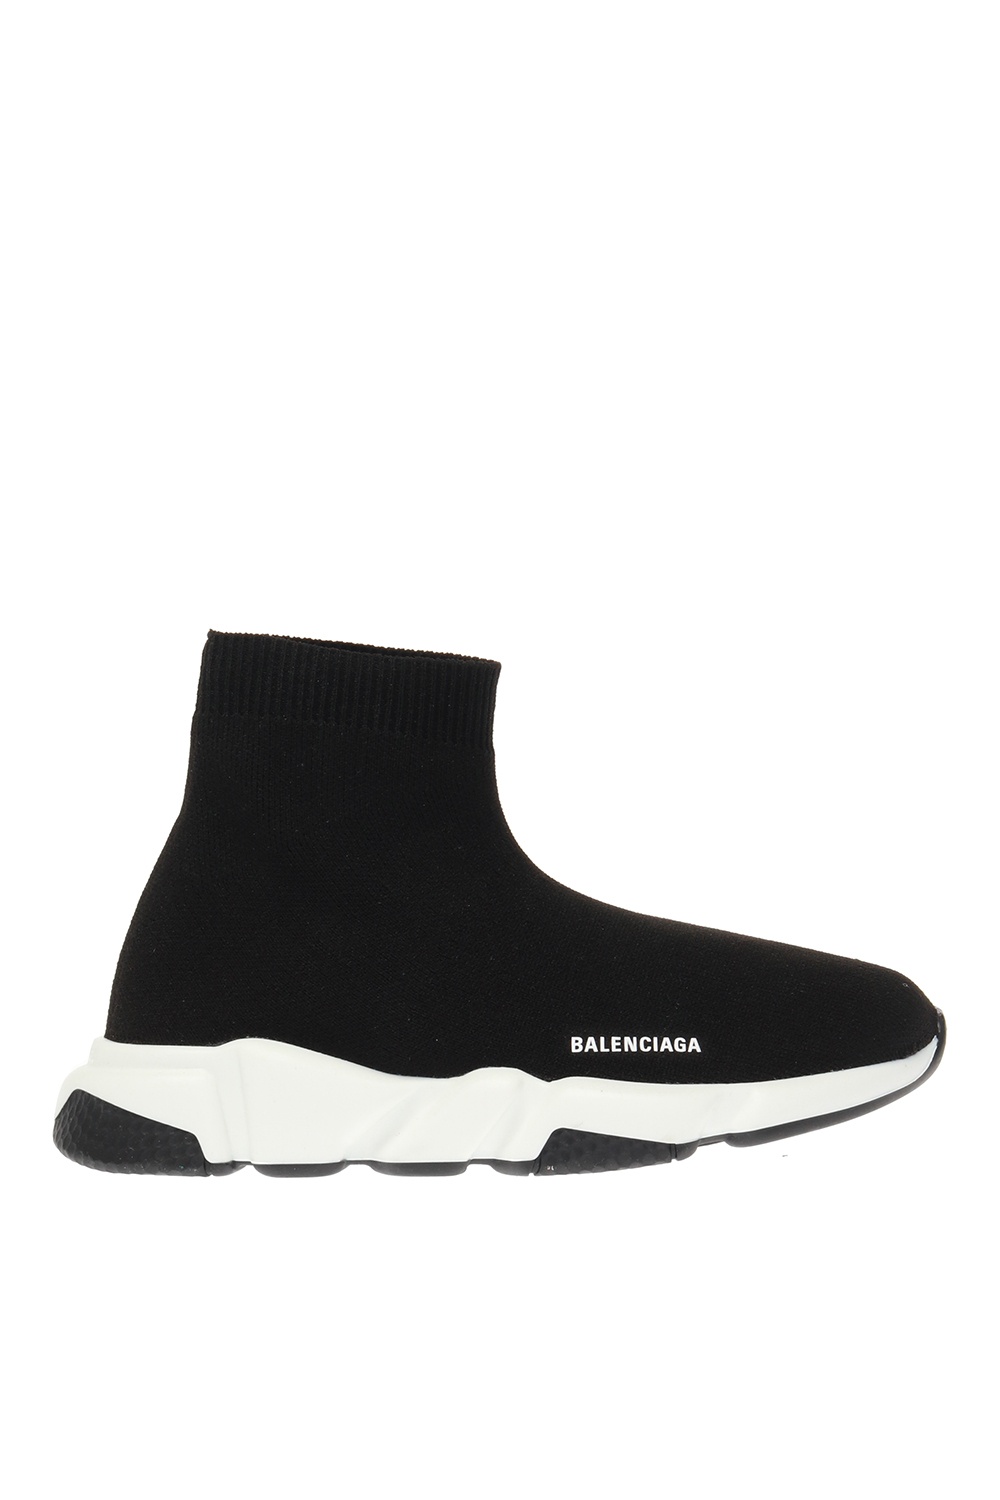 Balenciaga Kids ‘Speed’ sock sneakers